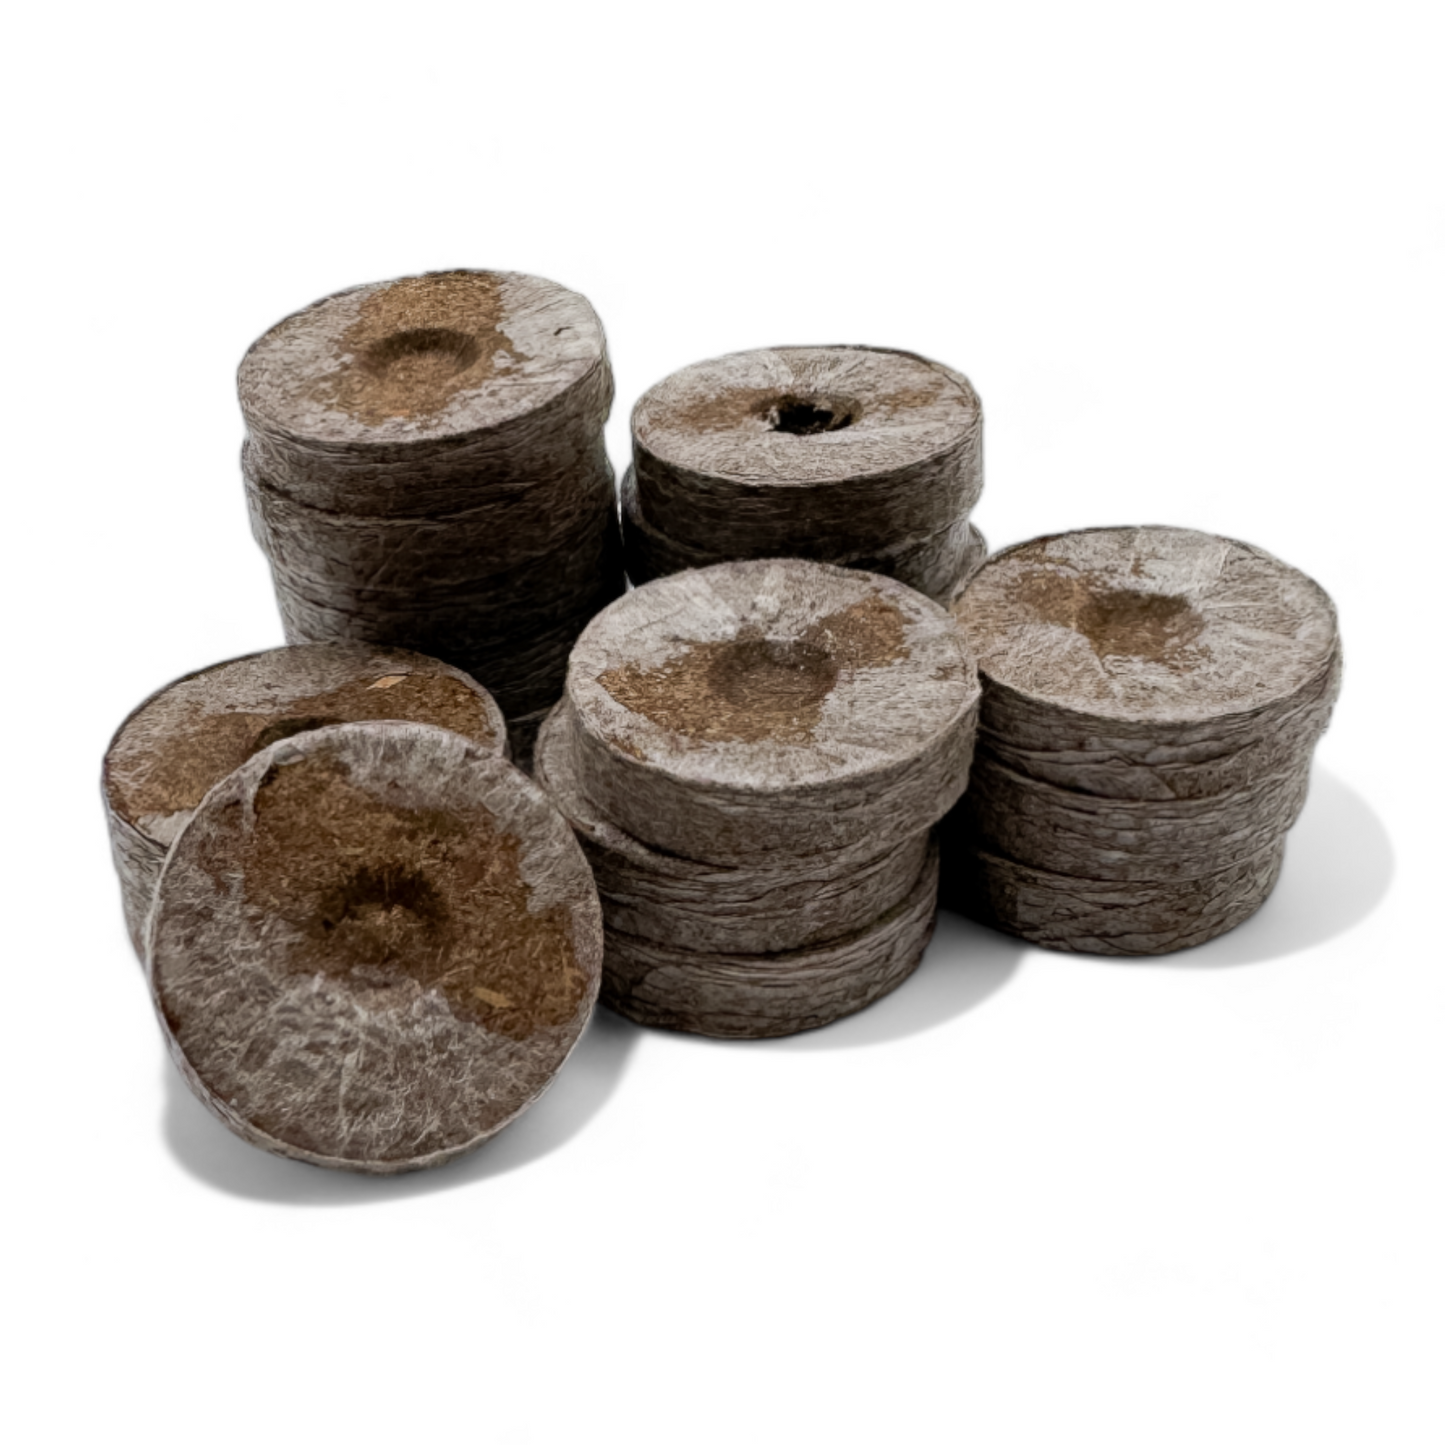 Jiffy Pellets (36mm) Compressed Peat Pellets